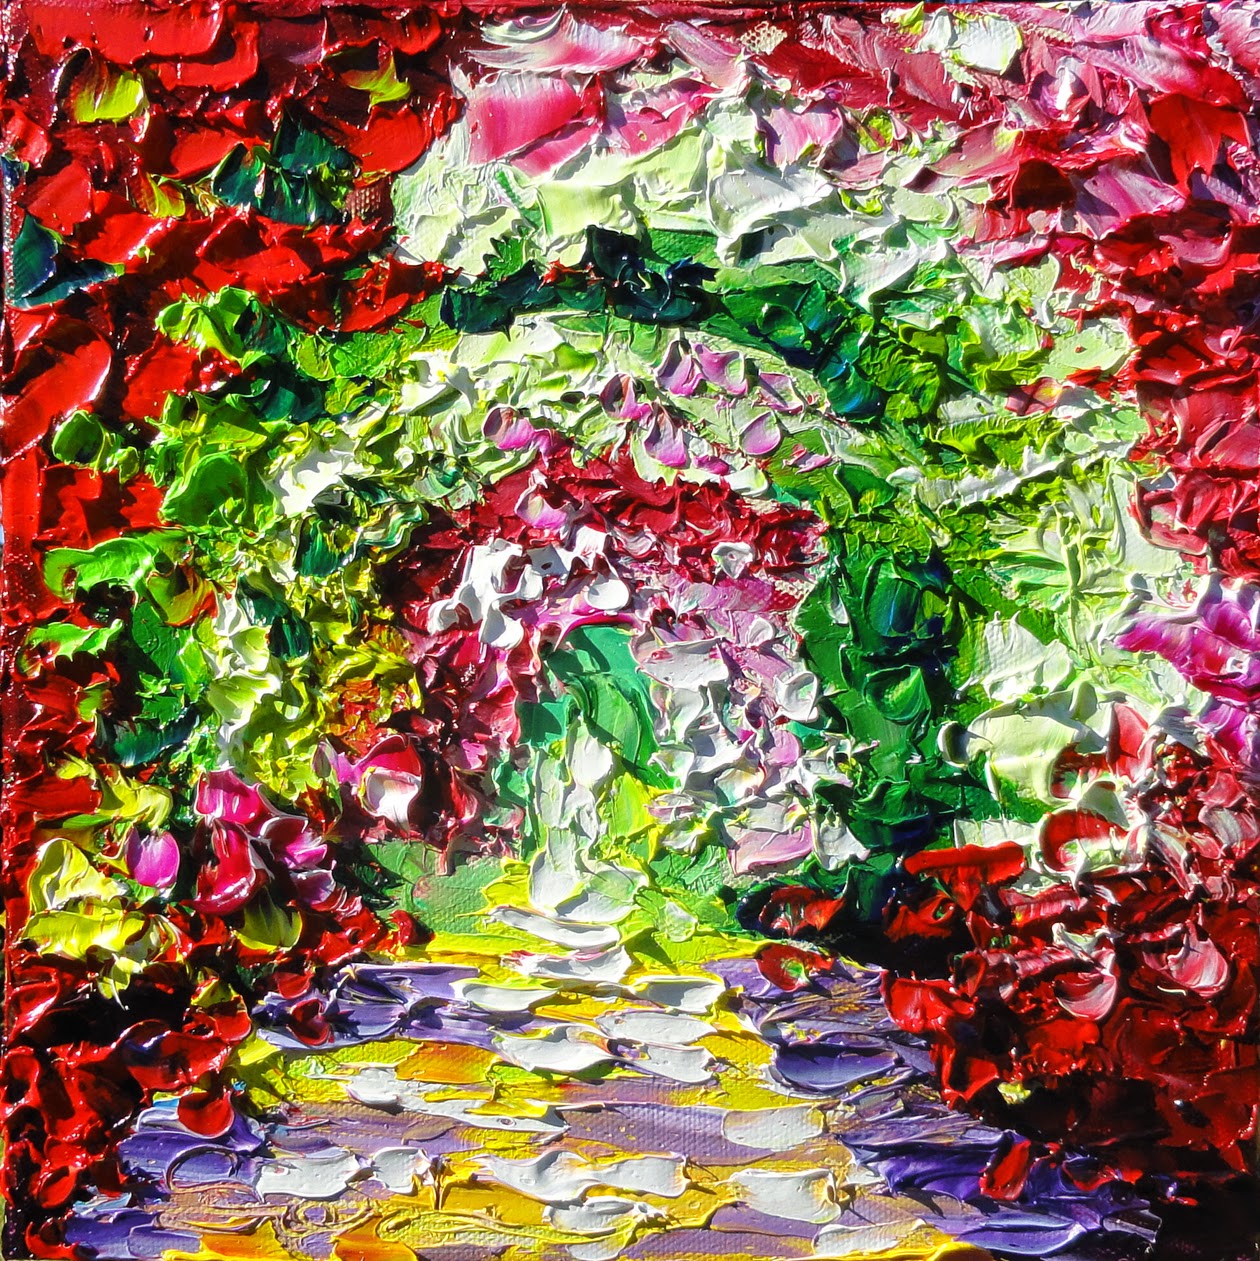 http://beatasasik.indiemade.com/product/b-sasik-original-oil-painting-garden-art-roses-painting?tid=53